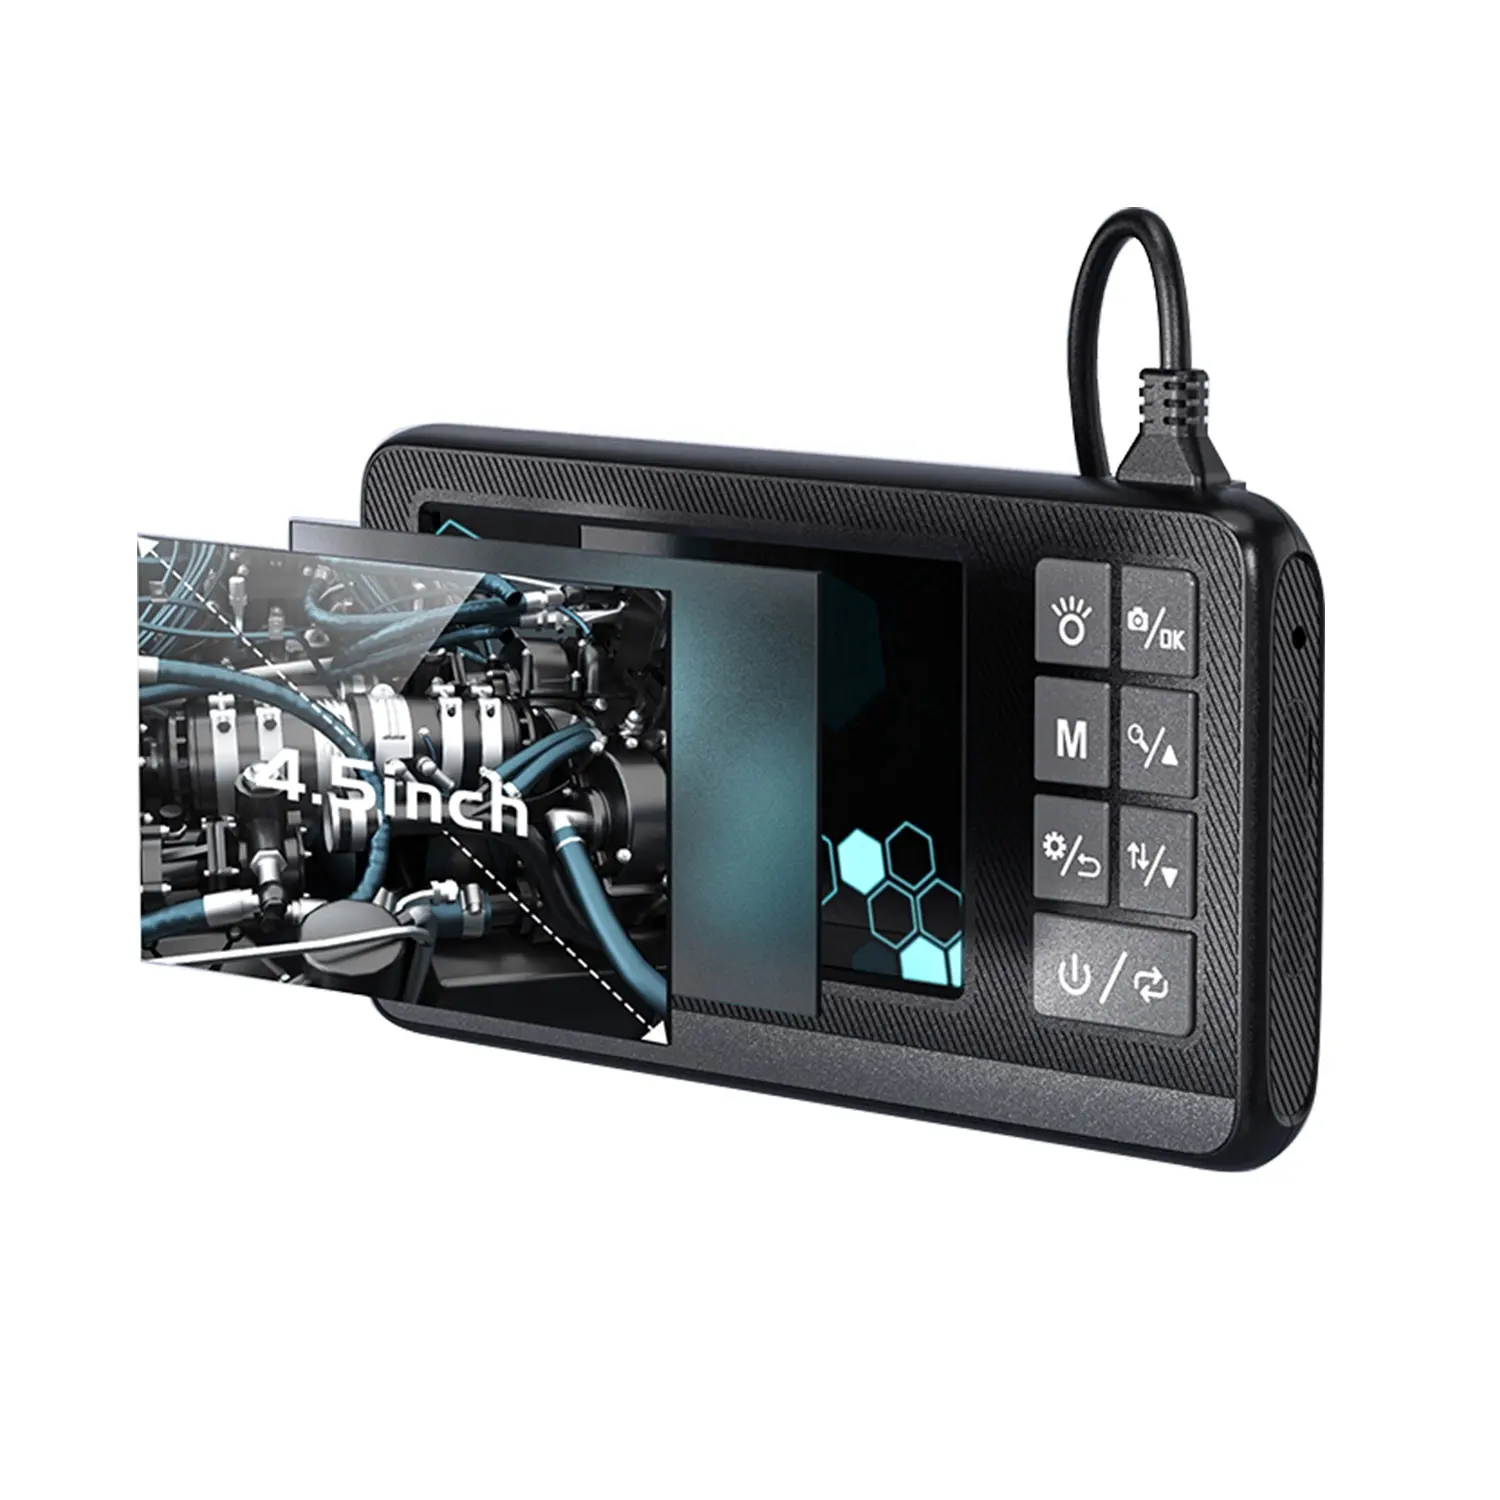 HD Industrial Endoscope Camera 1080P 4.3inch IPS Screen Portable borescope pipe inspection camera